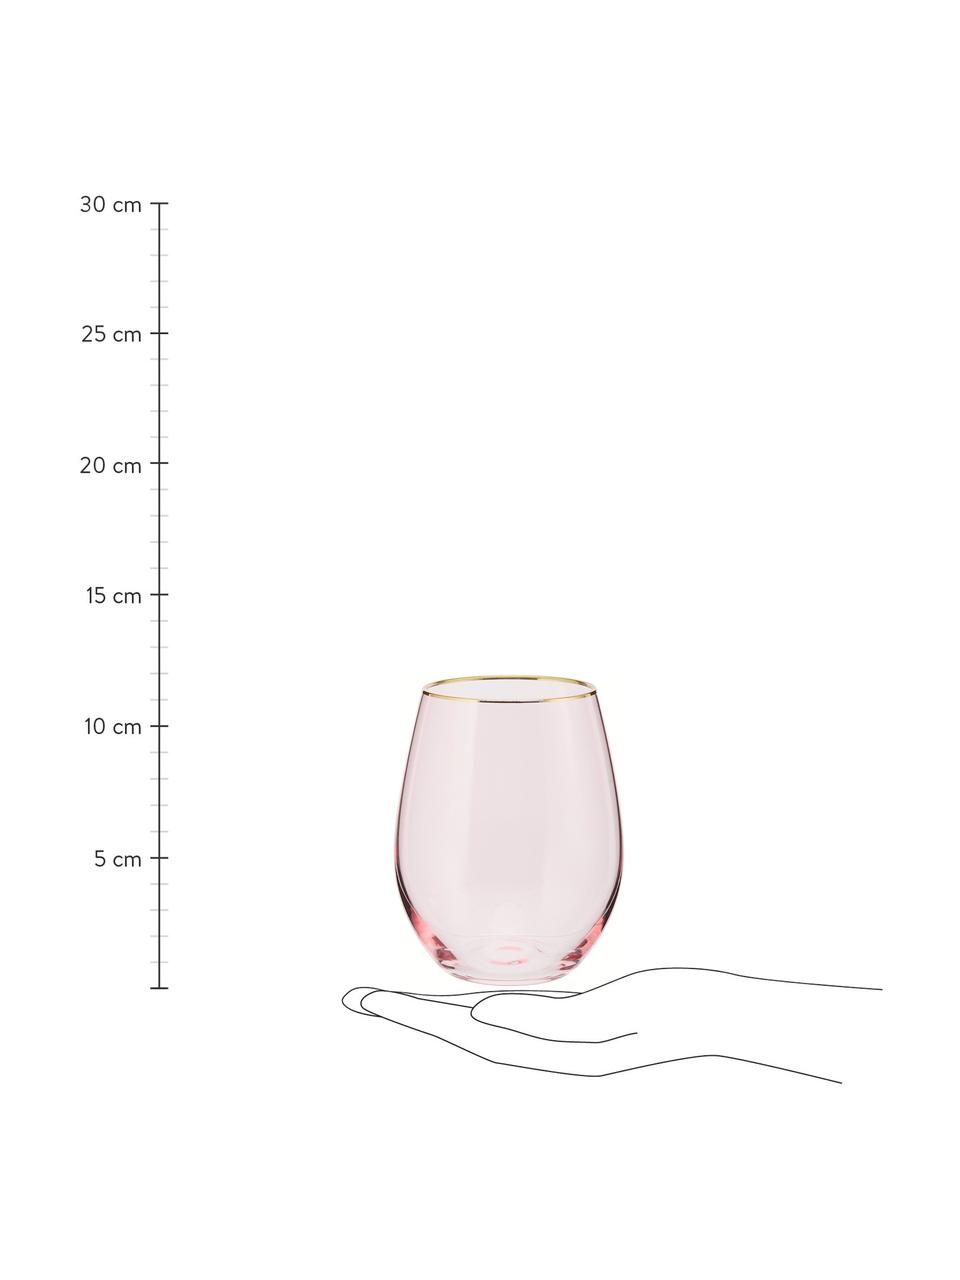 Waterglazen Chloe in roze met goudkleurige rand, 4 stuks, Glas, Perzikkleurig, goudkleurig, Ø 9 x H 12 cm, 600 ml